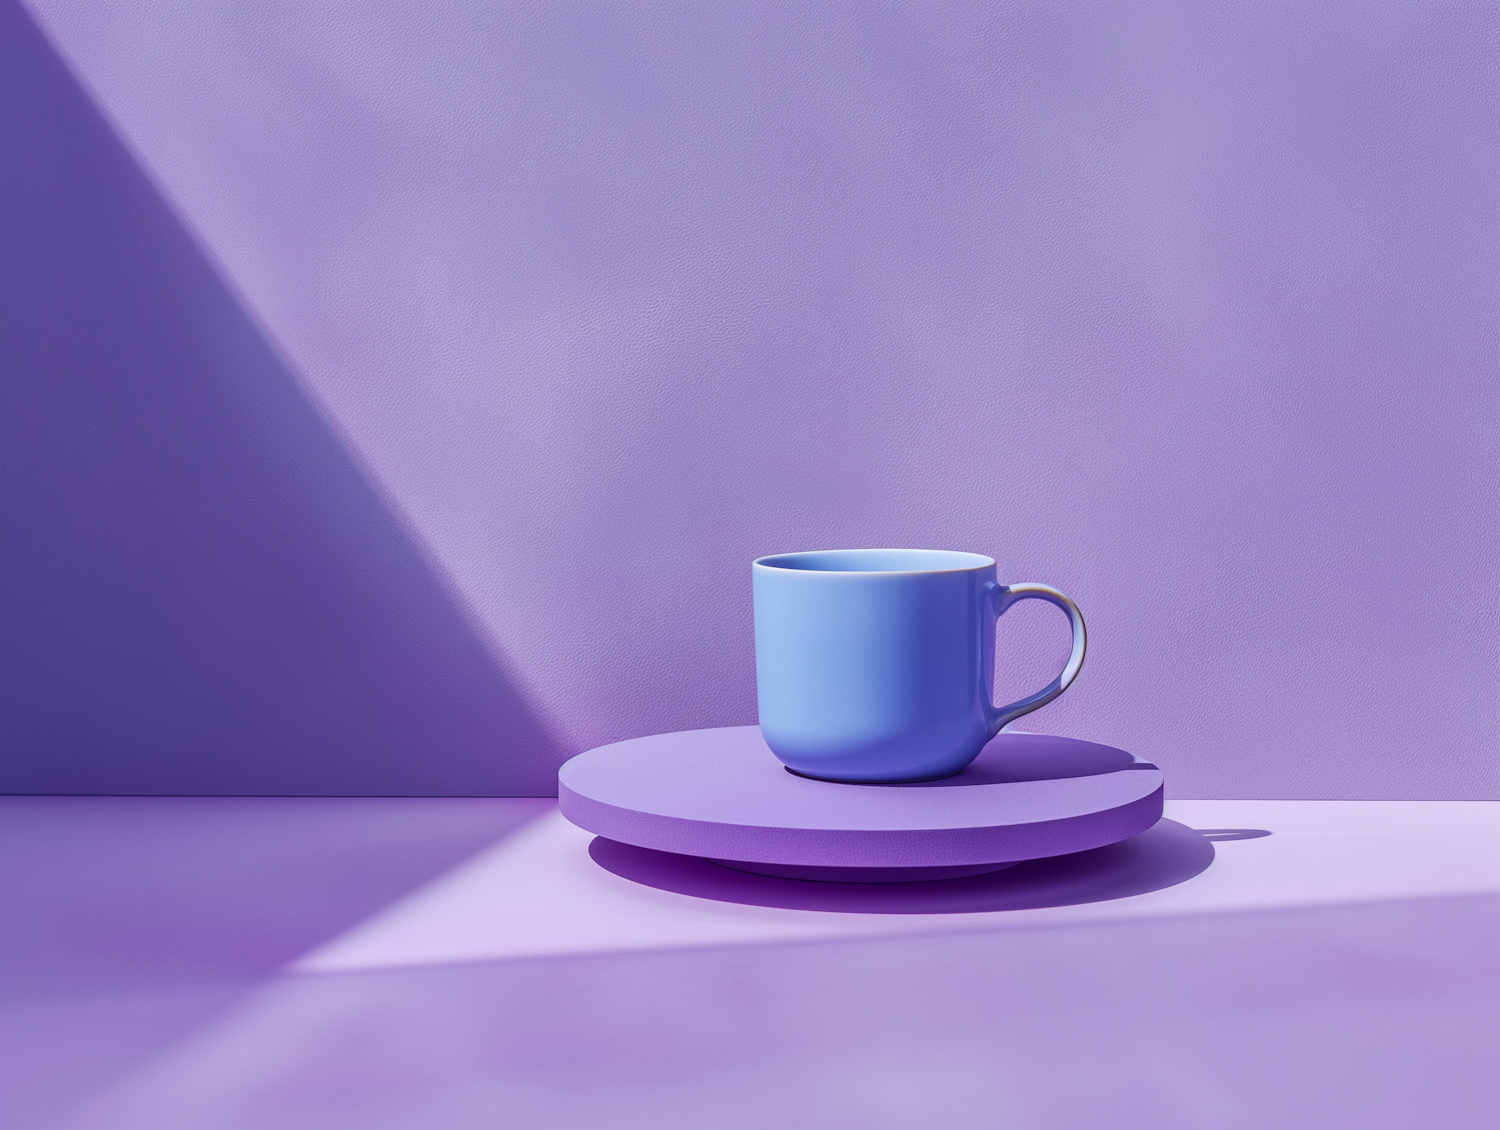 Minimalist Purple Still Life with Blue Cup